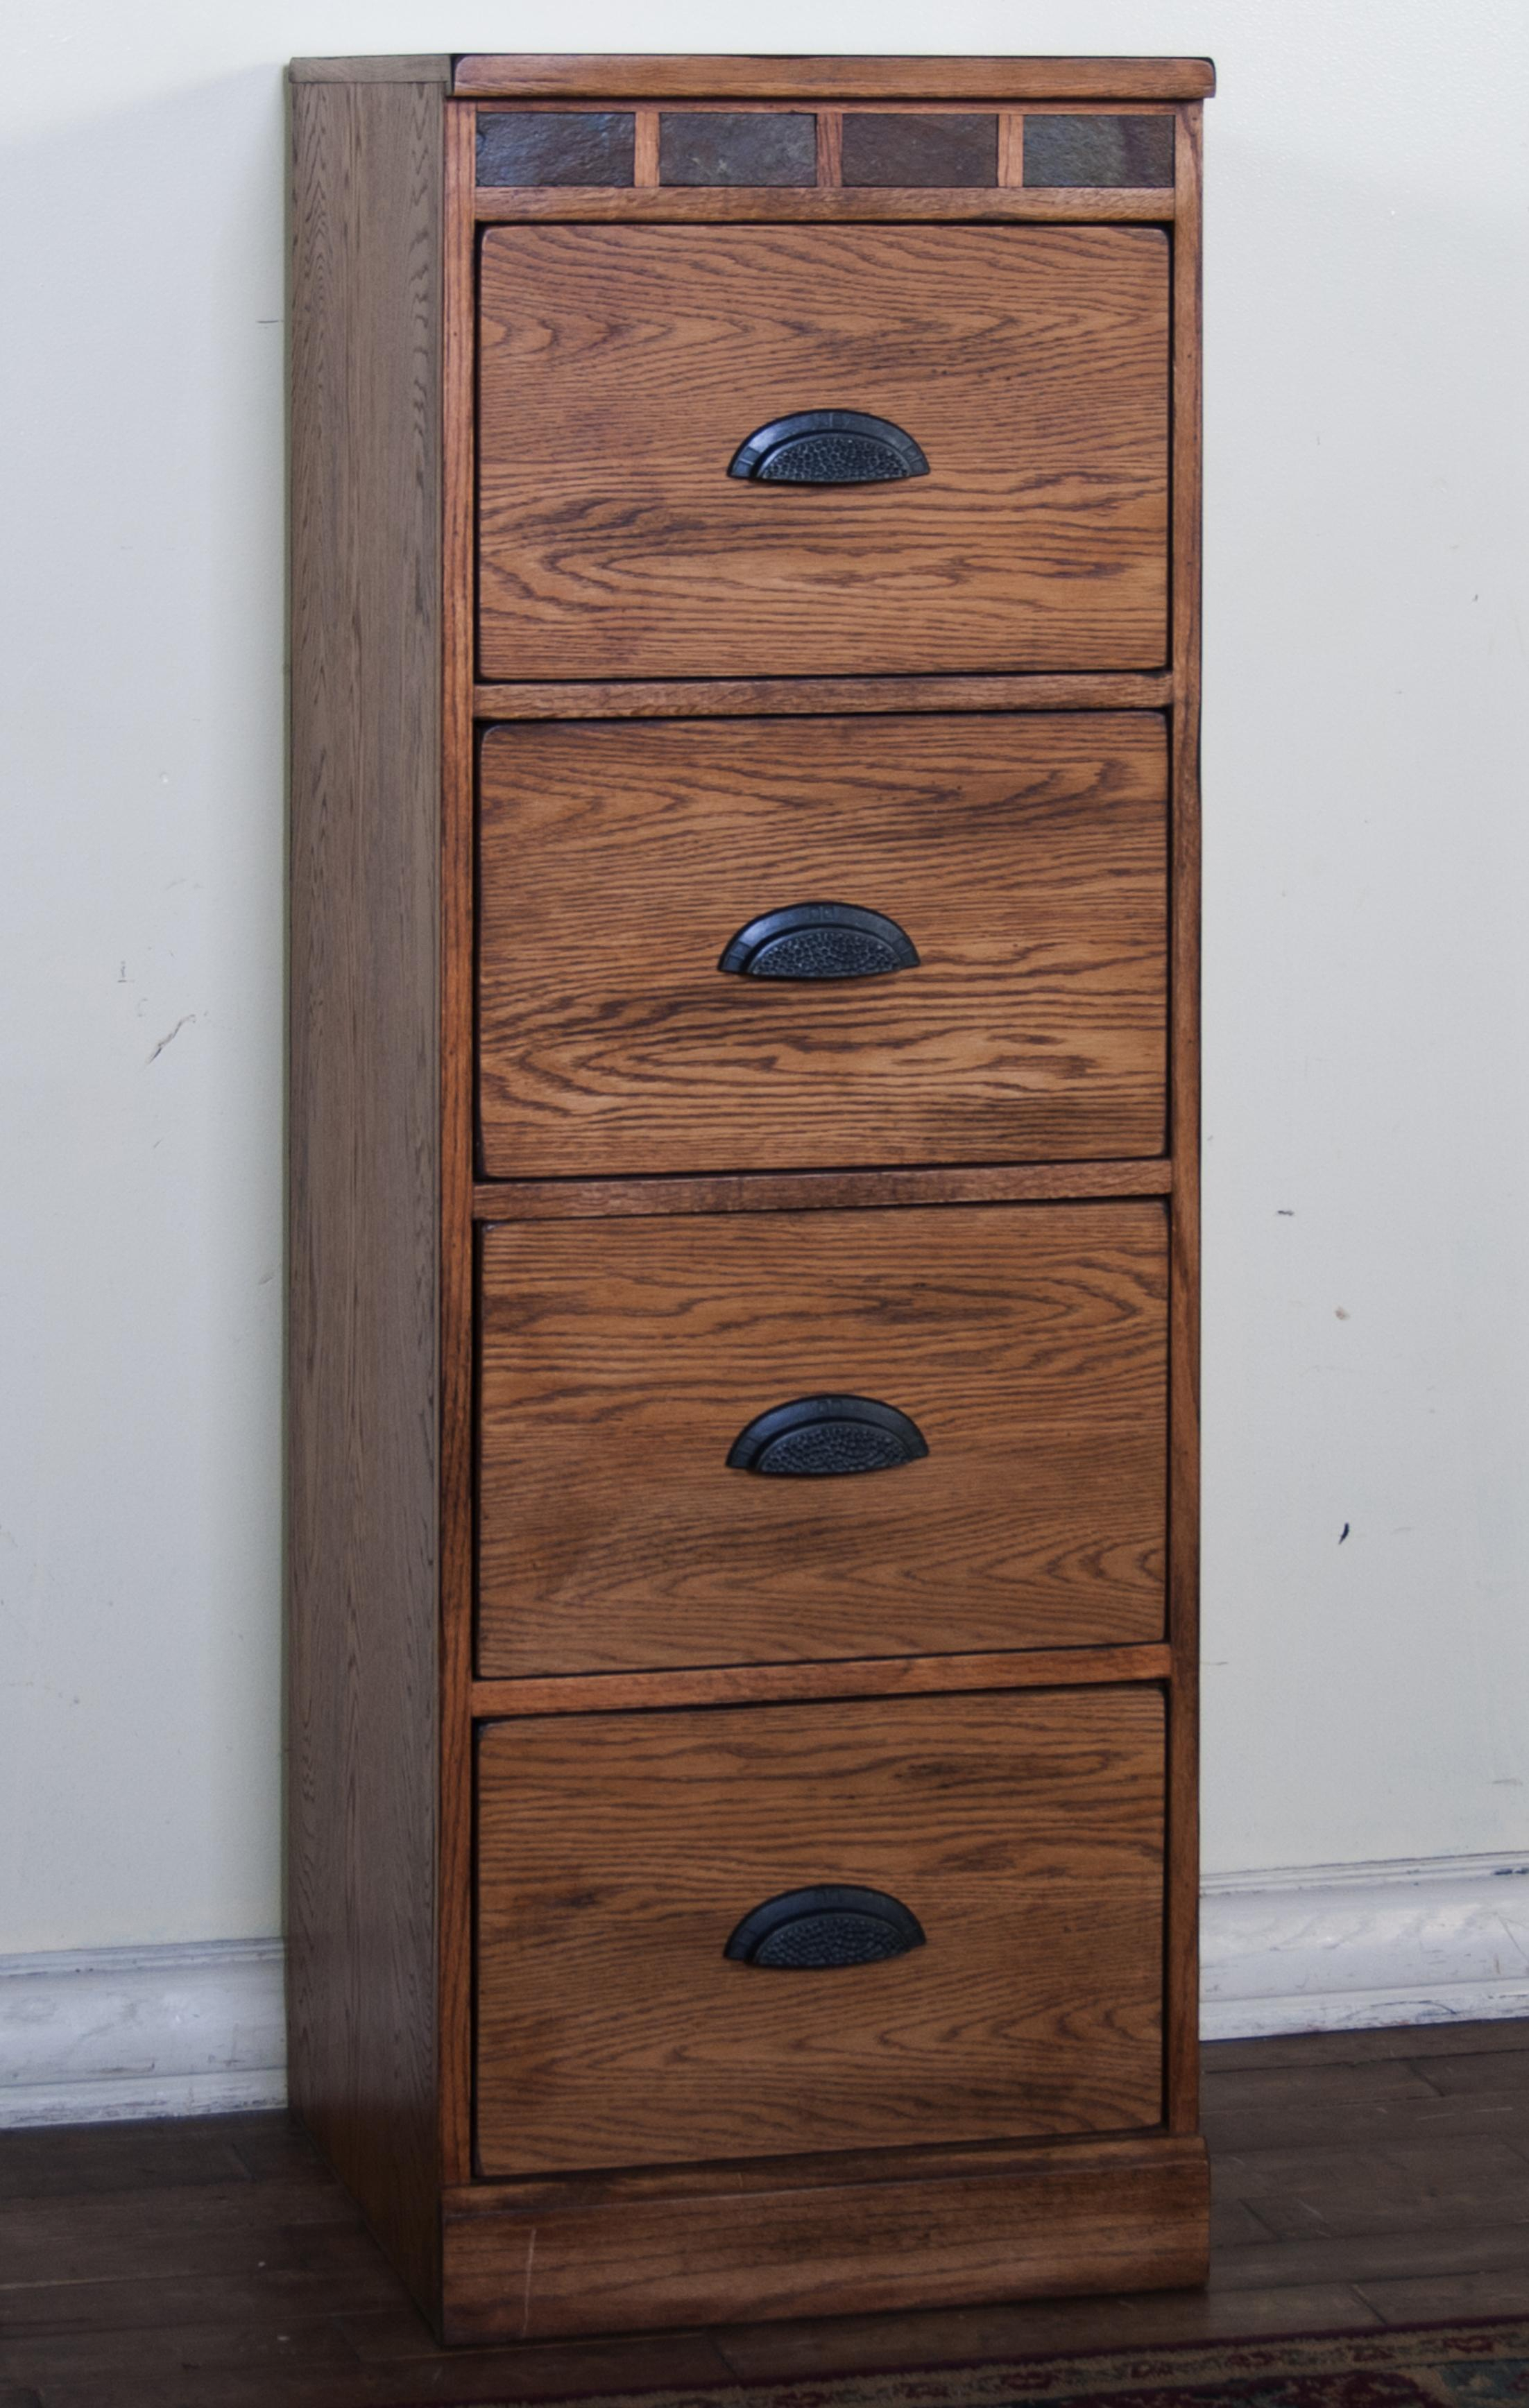 4 Drawer Filing Cabinet Wood Effect Drawer Design pertaining to sizing 2204 X 3472